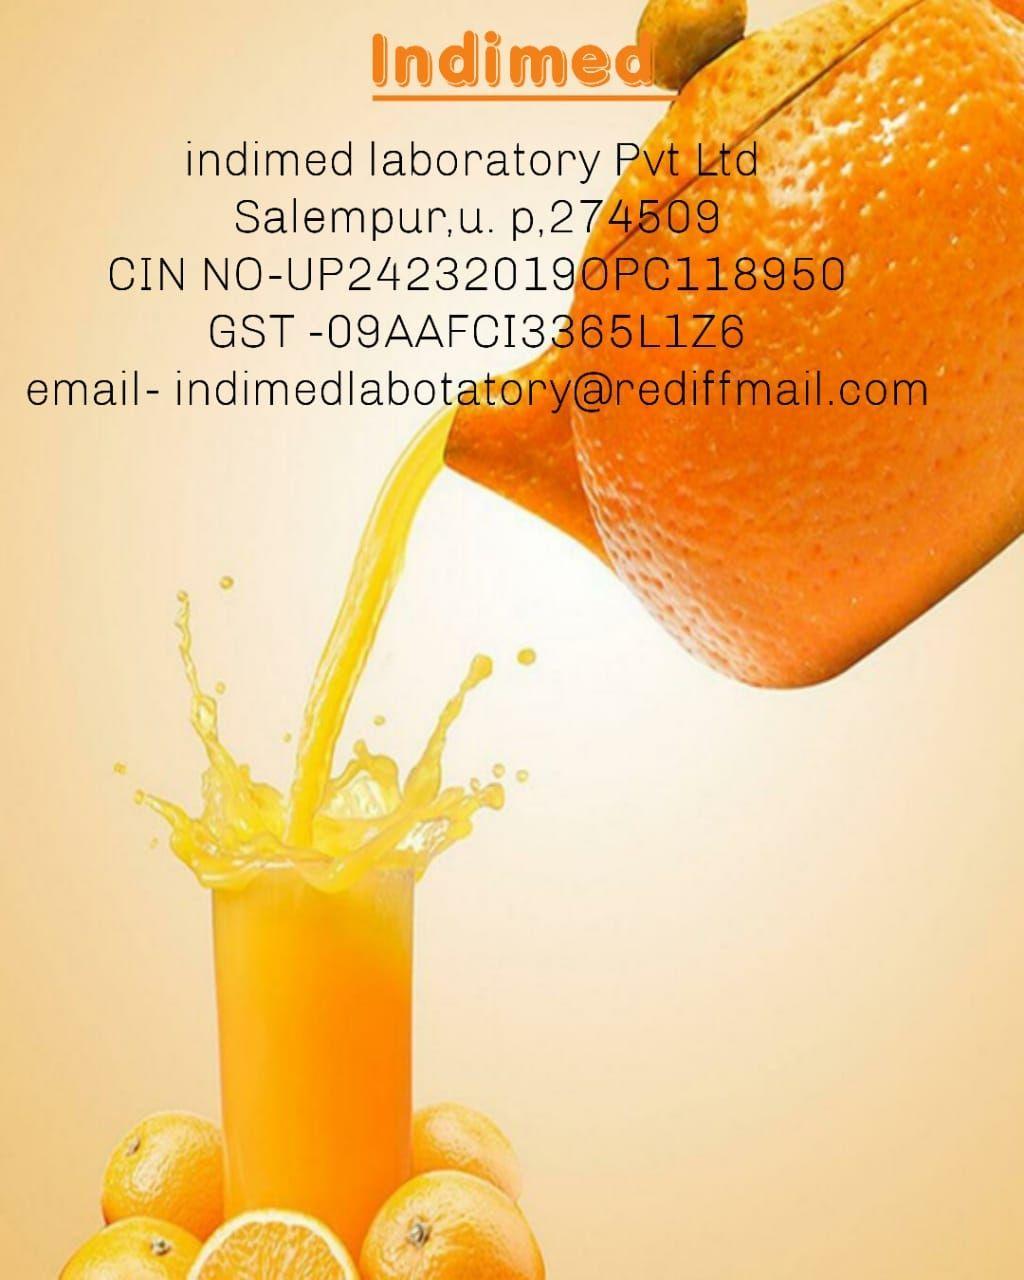 Indimed Laboratory Pvt Ltd